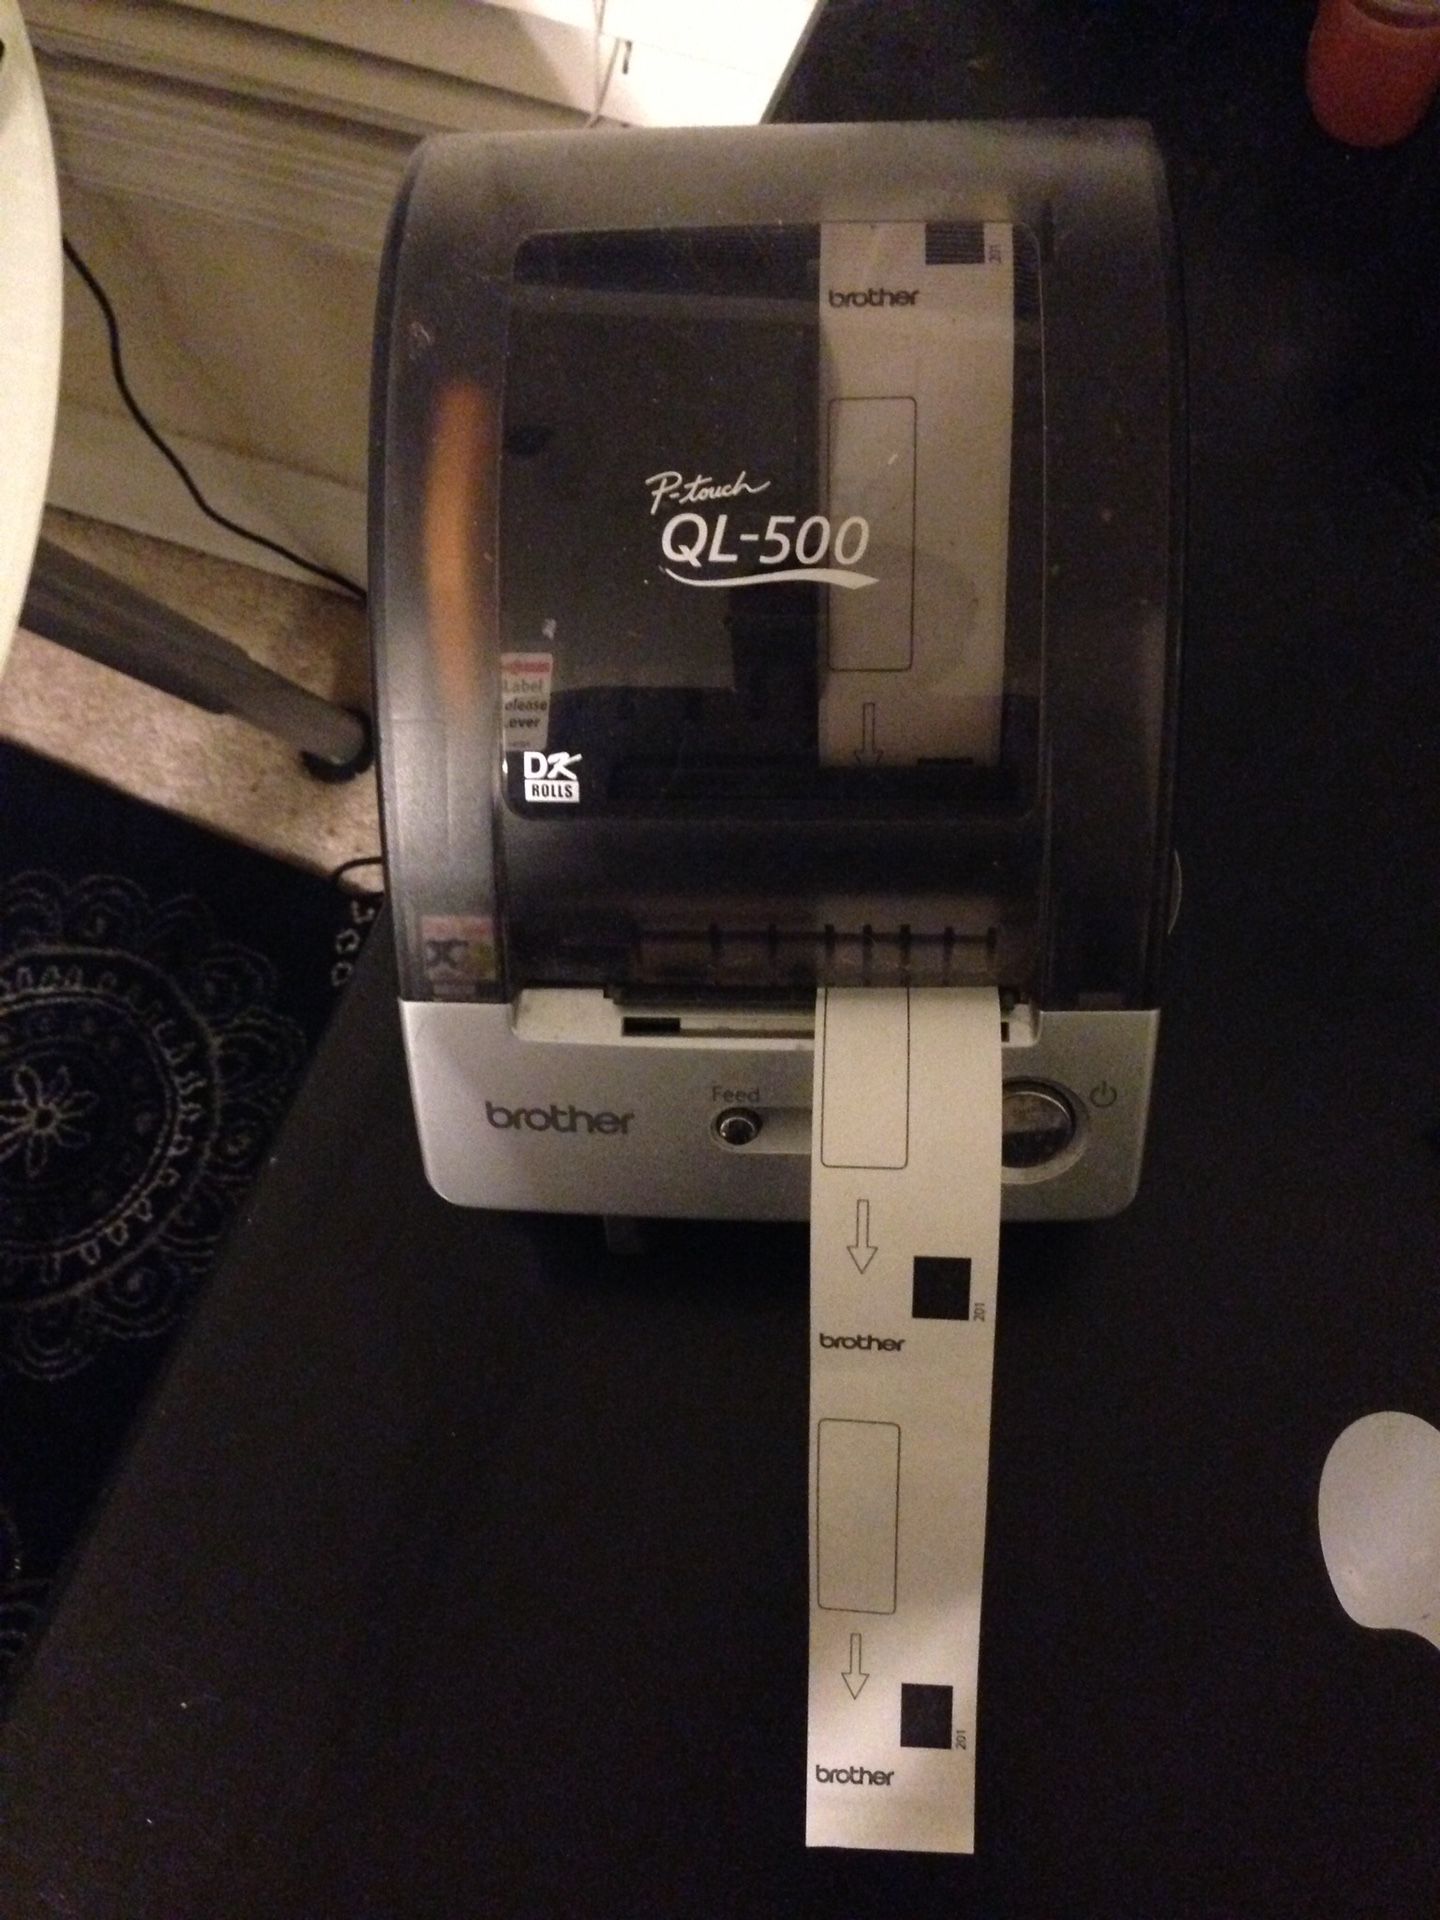 P-Touch QL-500 Label Printer